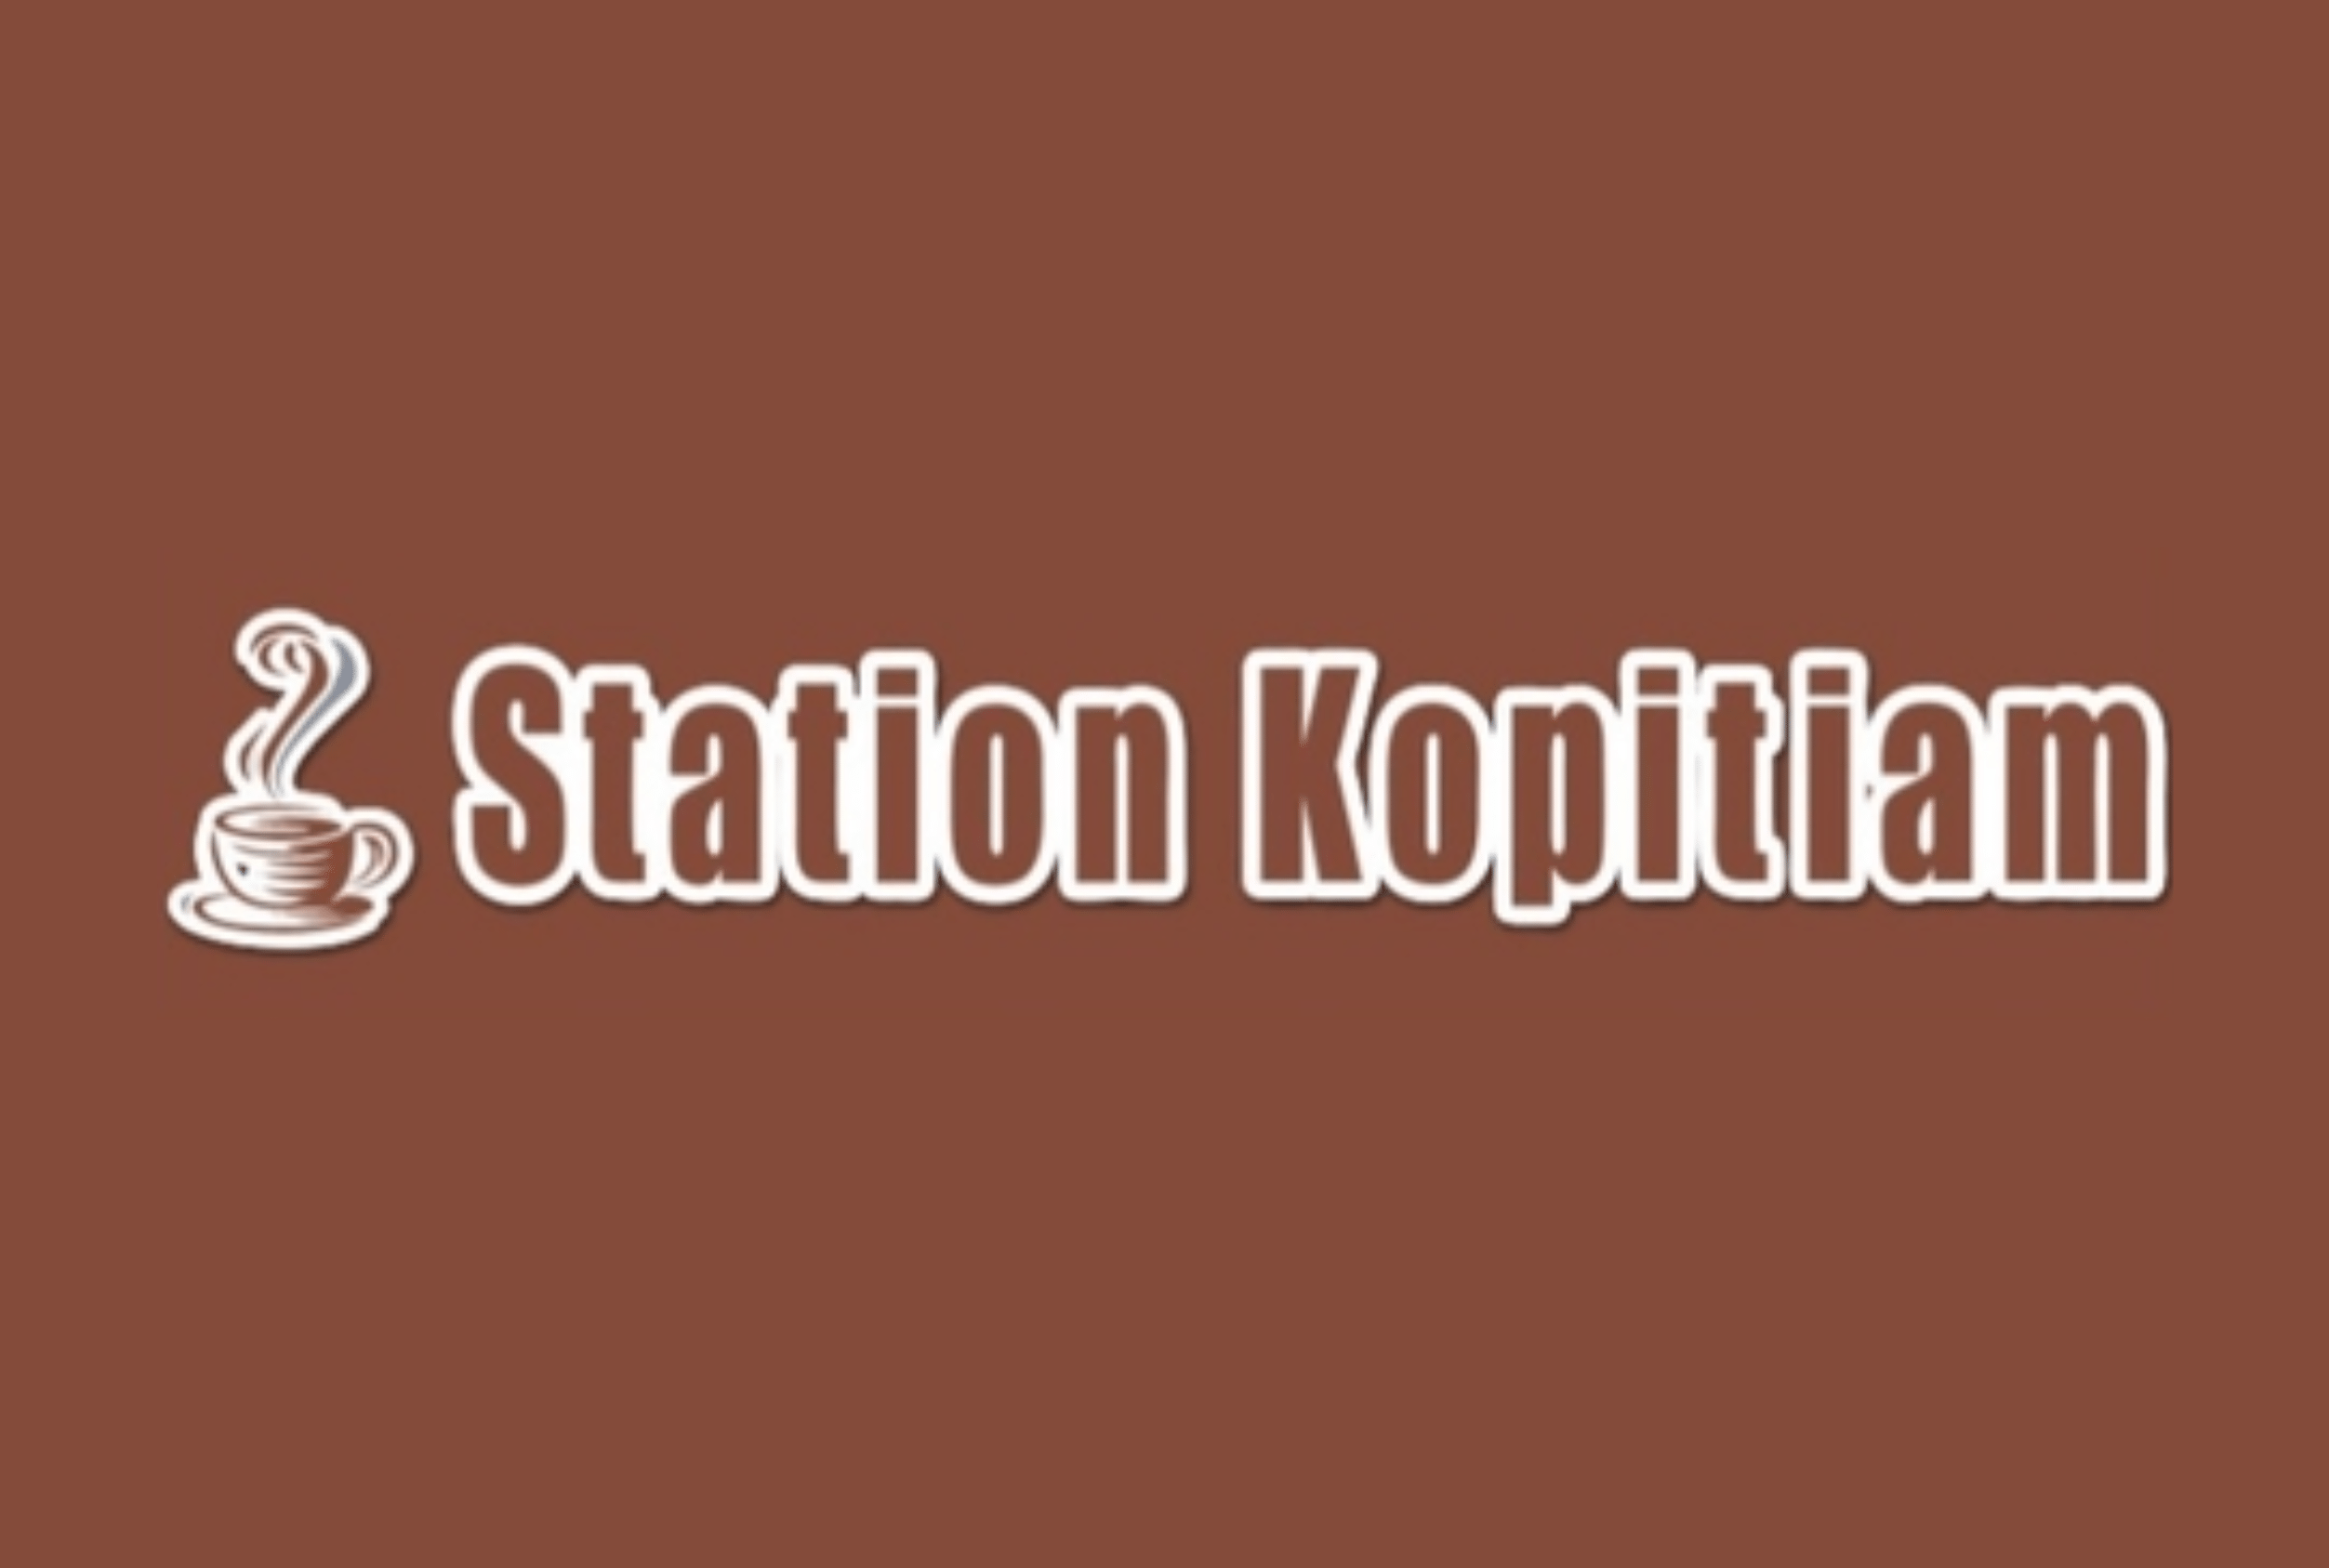 Station Kopitiam